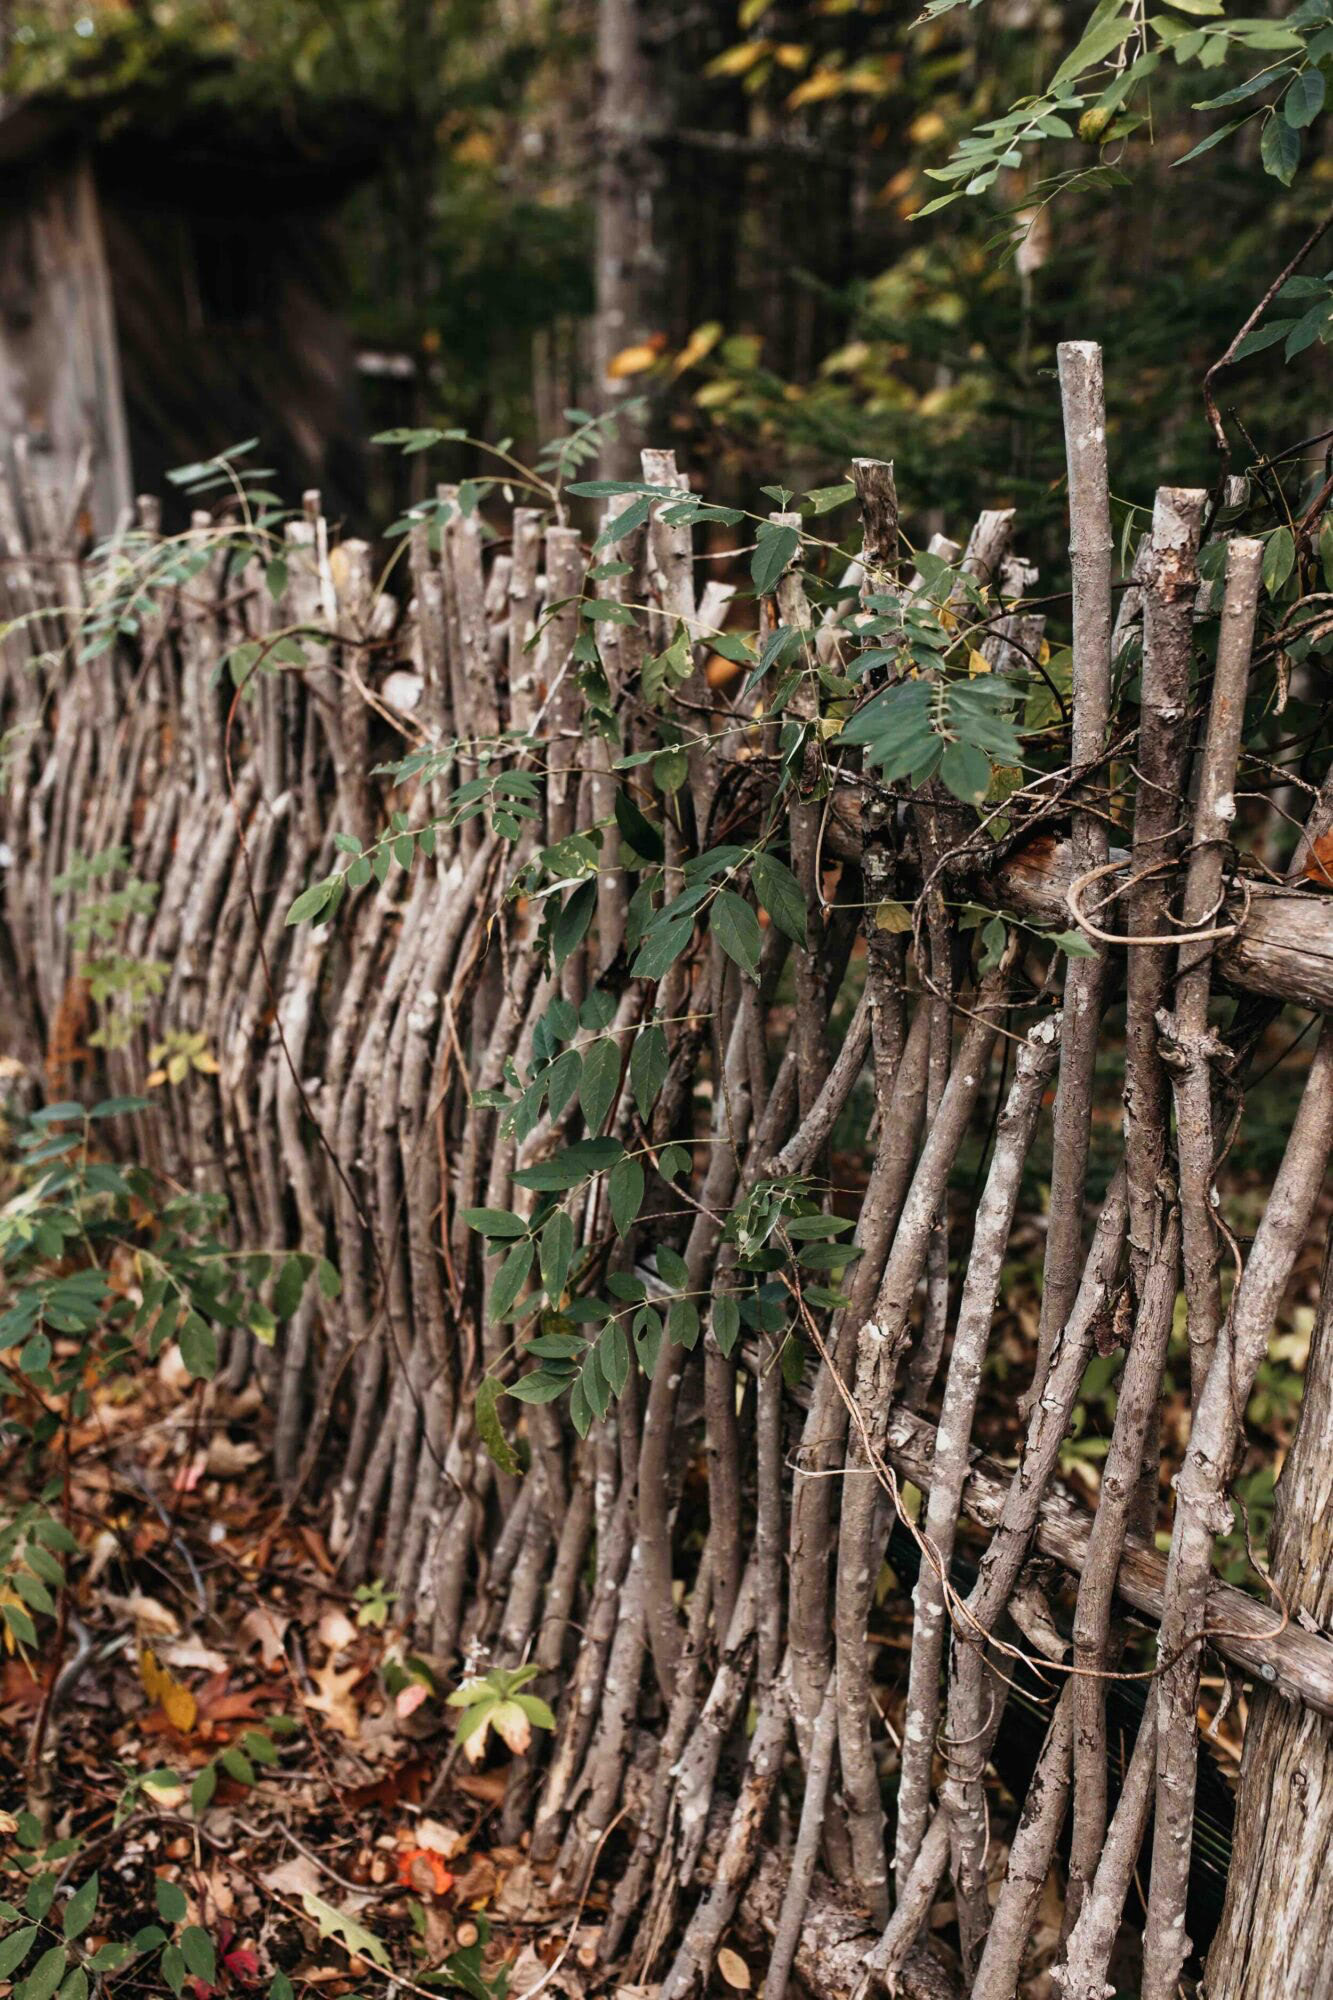  A handmade fence forged with sticks creates a climbing mechanism for the lot’s abundant vegetation. 